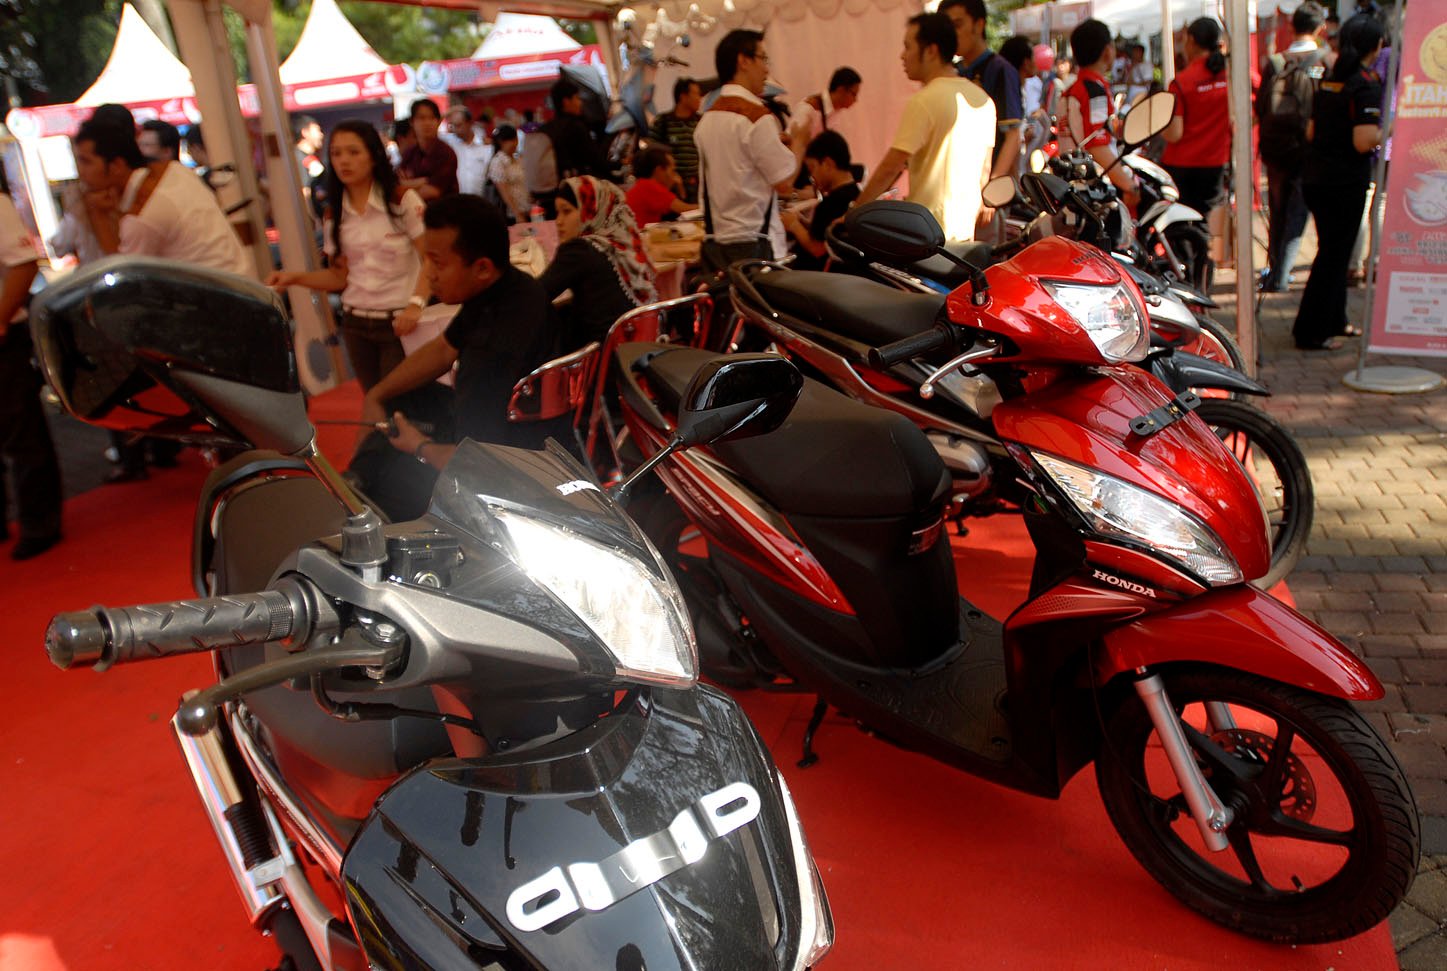  FOTO: Penjualan sepeda motor semester I/2011 naik